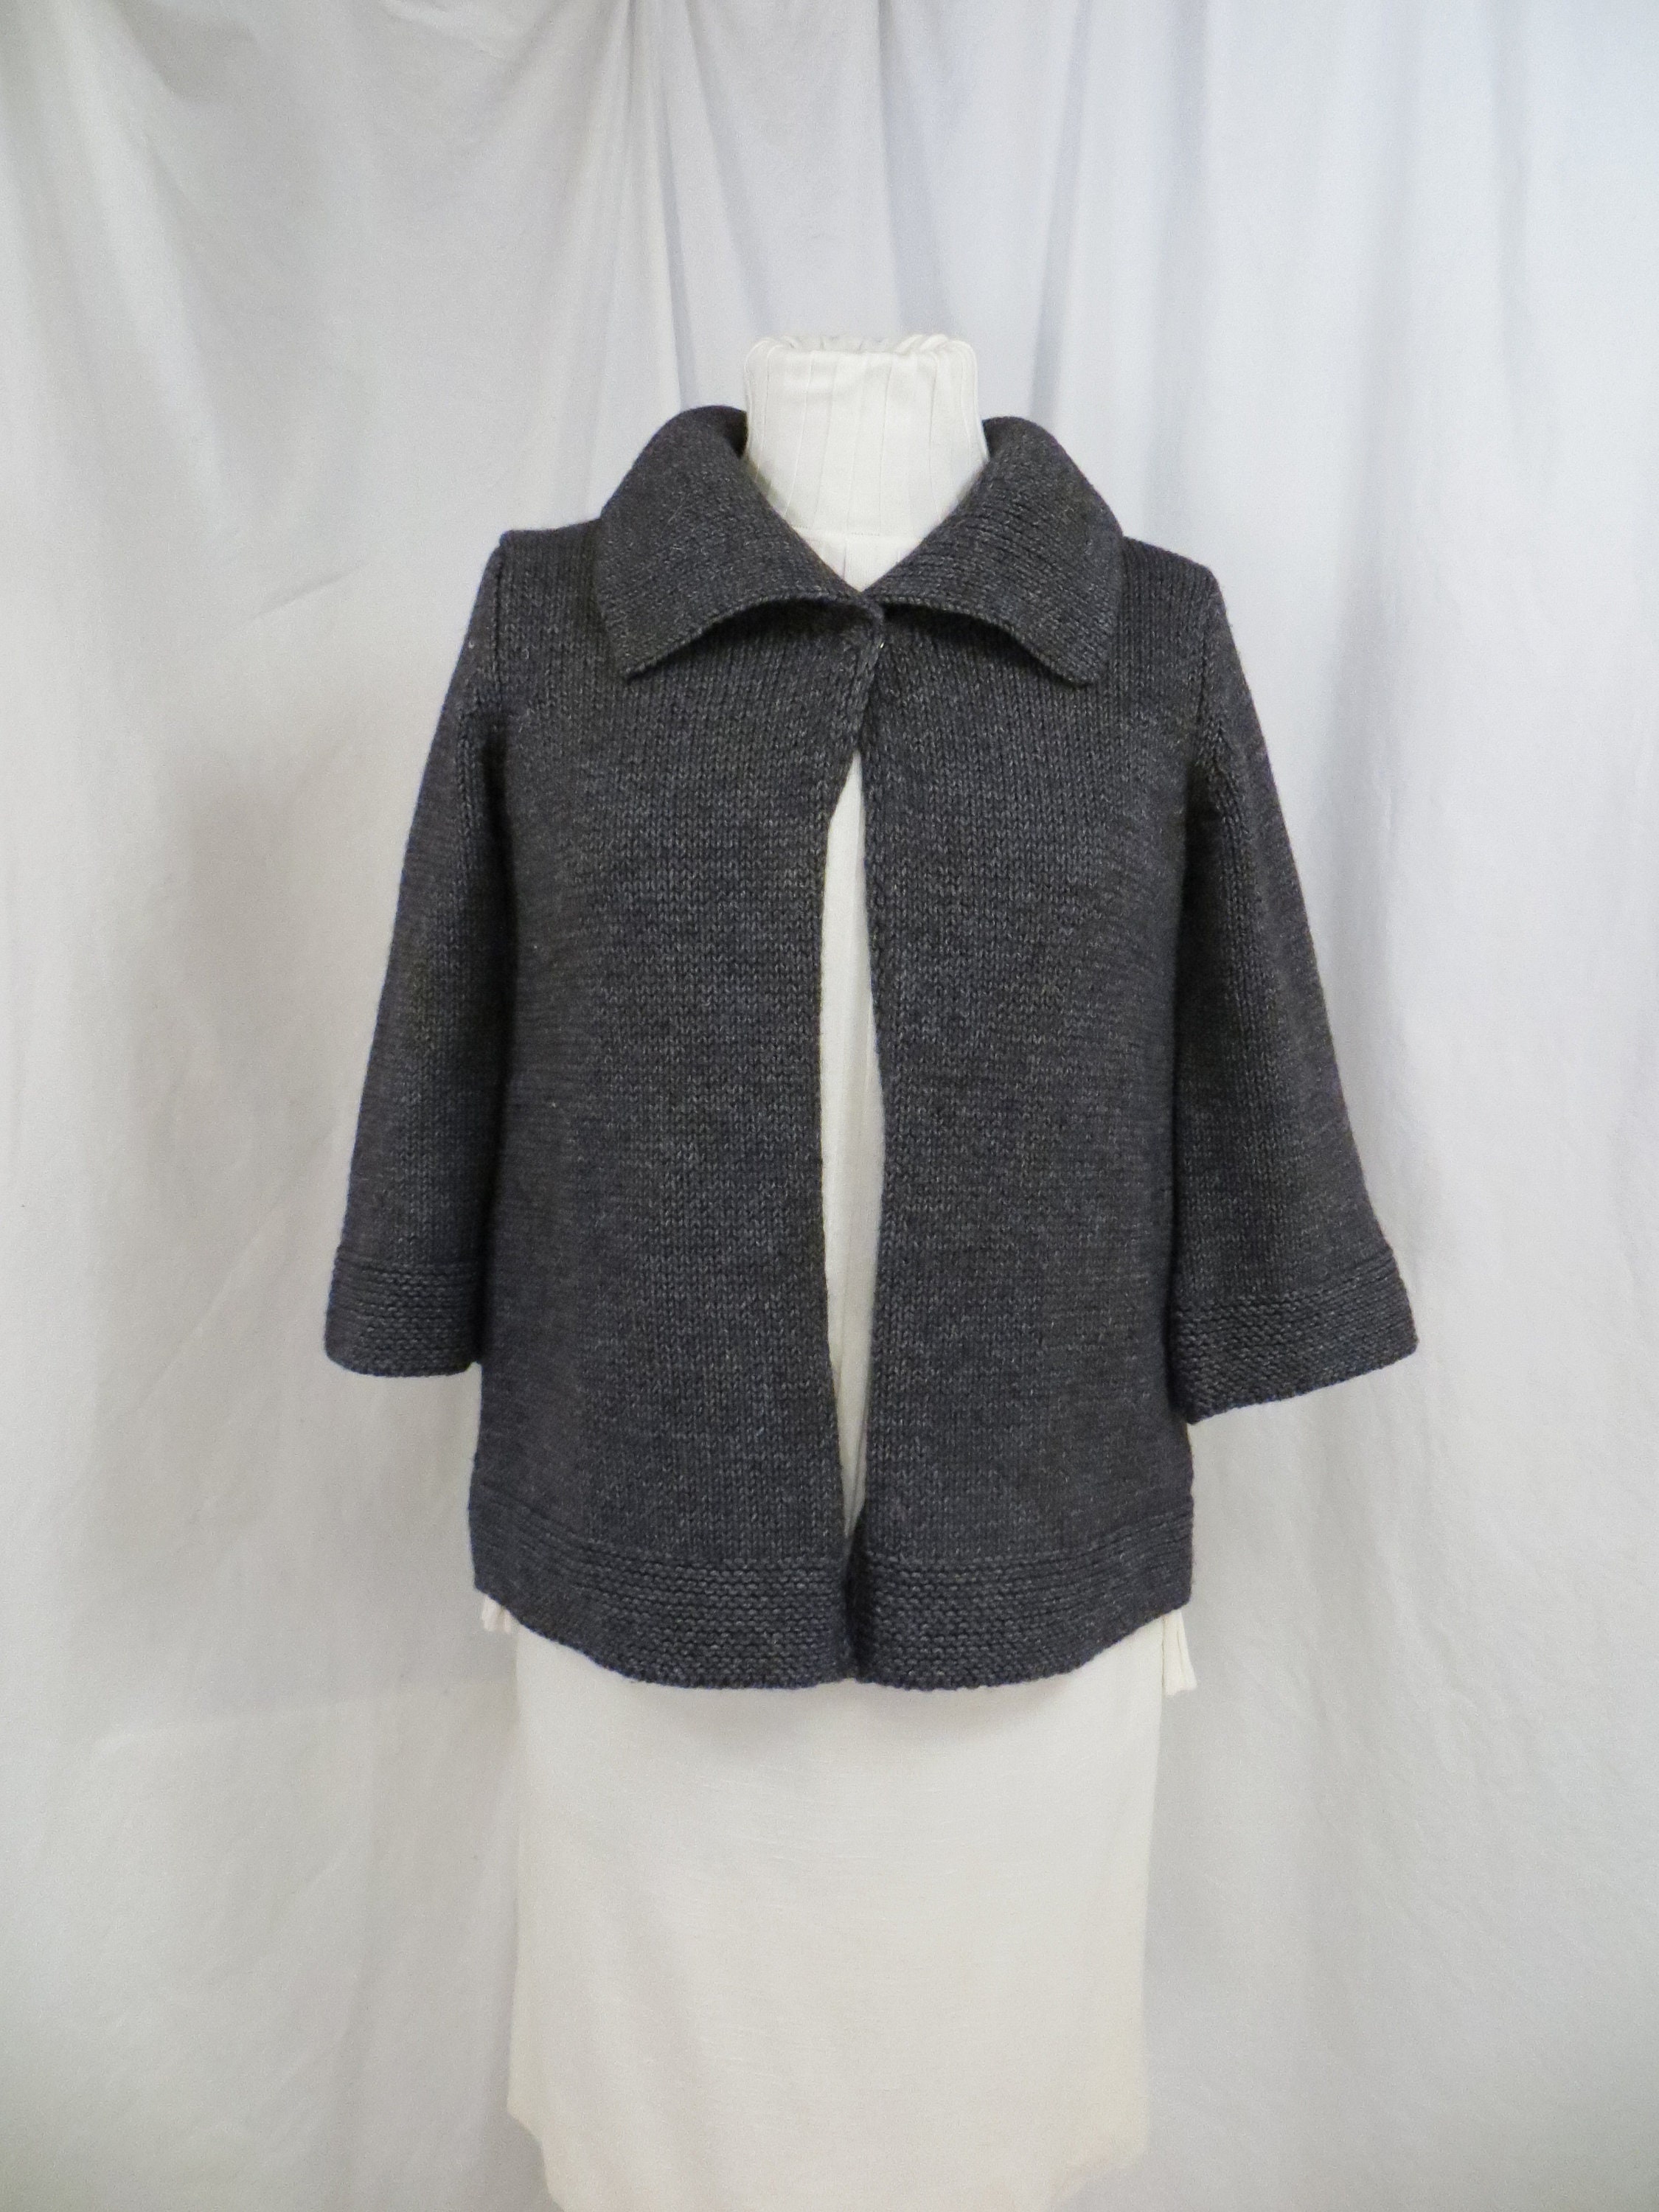 Italian Sweater Soft Wool Blend Jacket Cardigan Stylish Warm Beautiful Charcoal Gray Heather Vintage